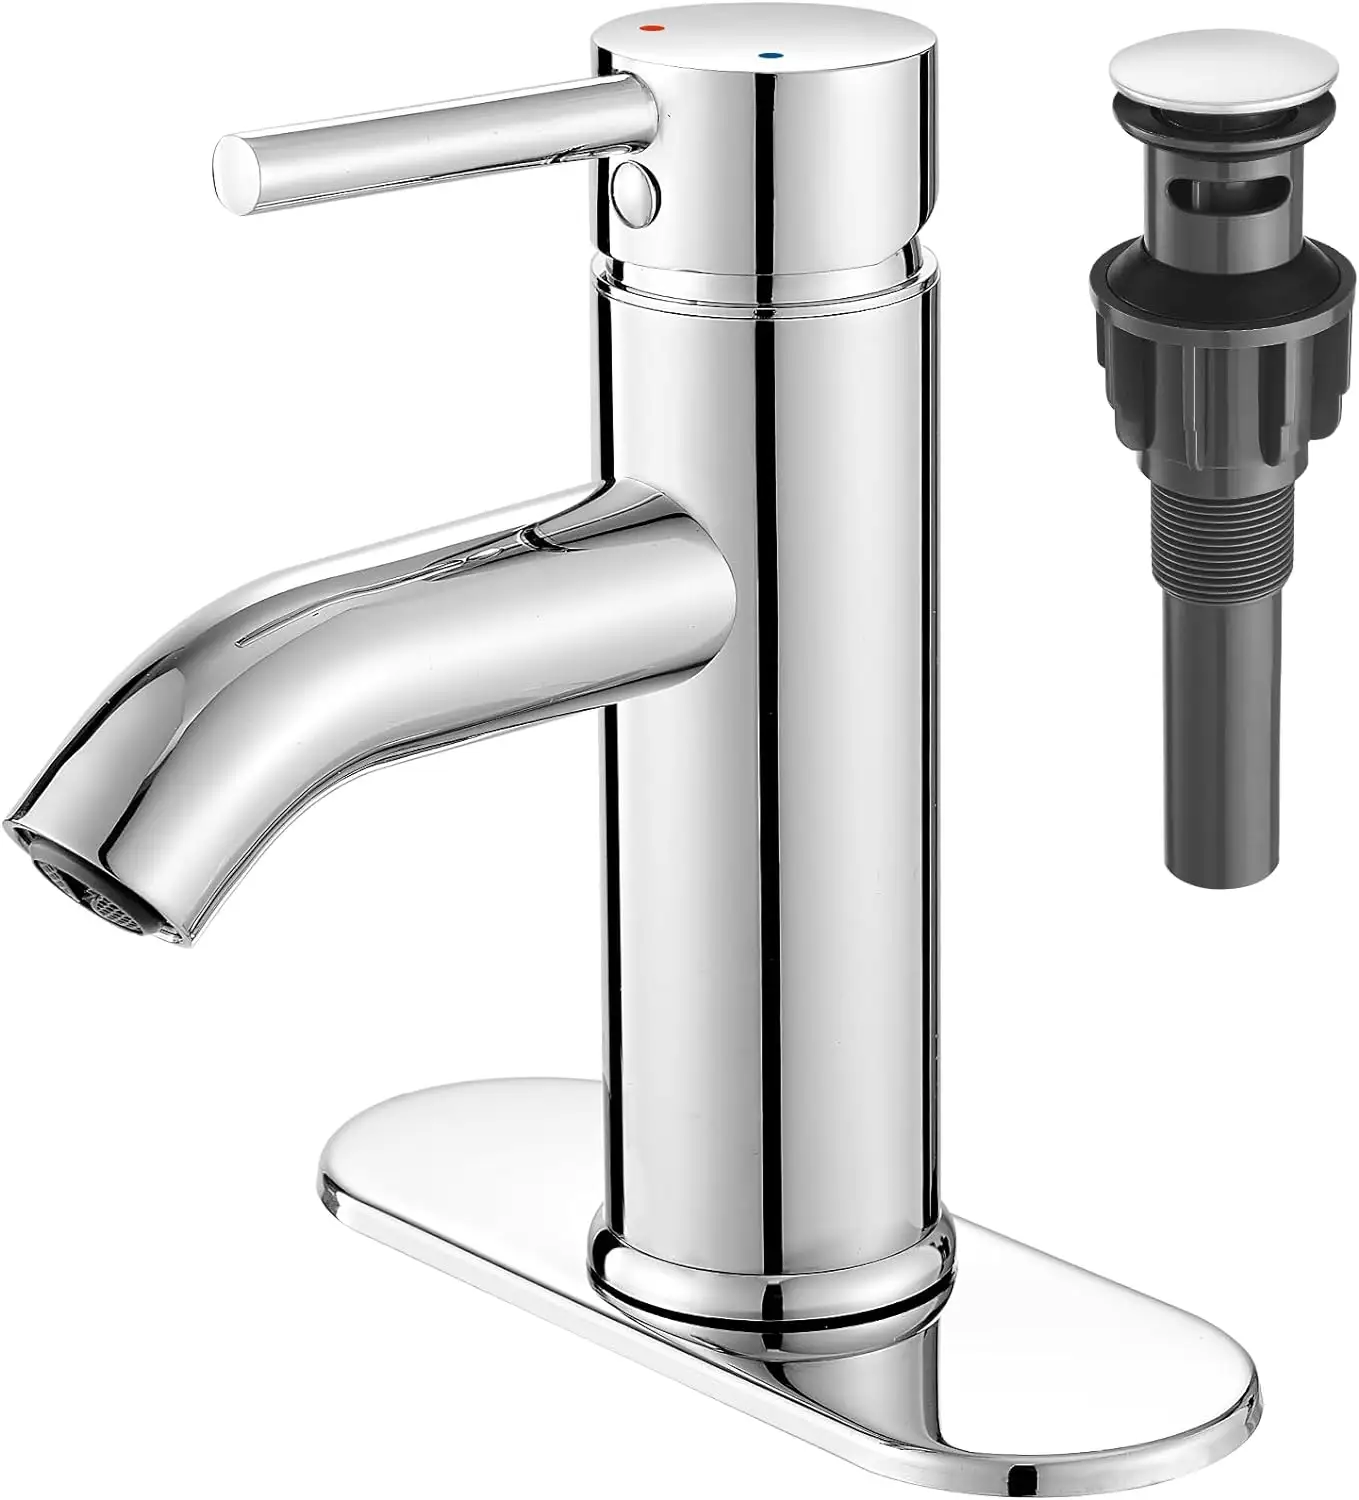 Single Handle Bathroom Faucet with Pop-up Drain, 1 or 3 Hole, Chrome Finish hole modern bathroom water basin faucet